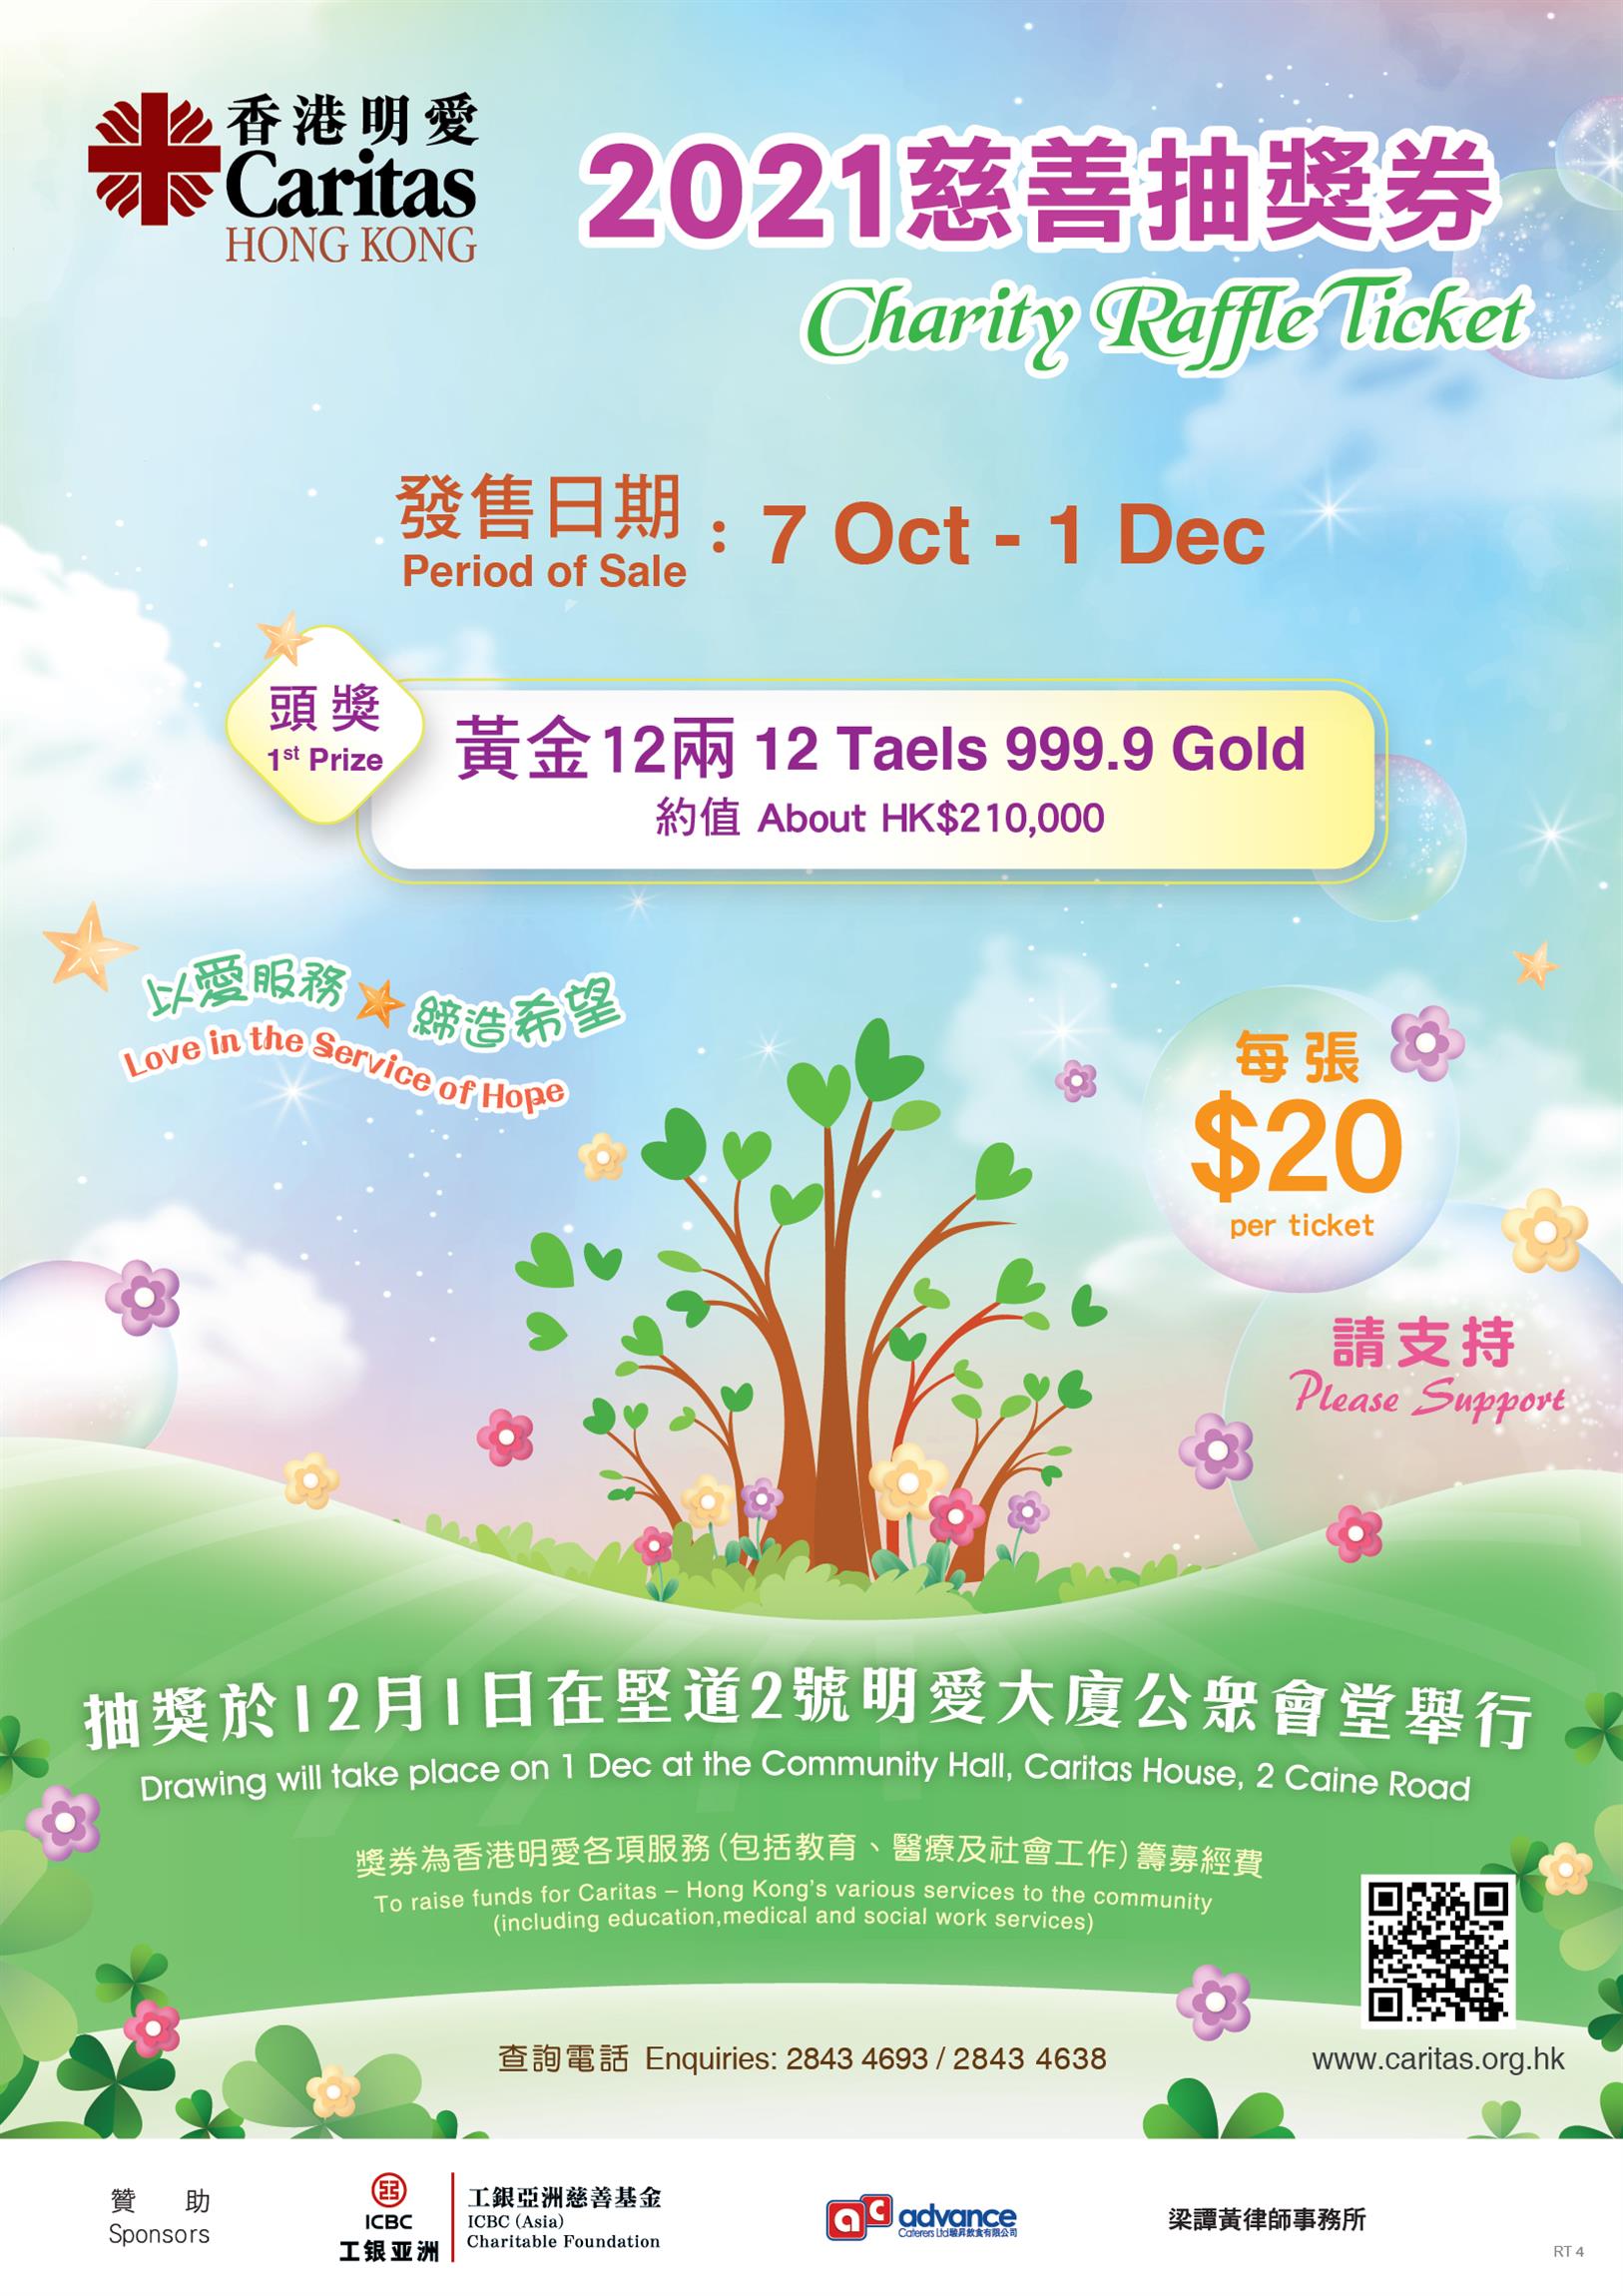 2021 Caritas Hong Kong Charity Raffle Ticket